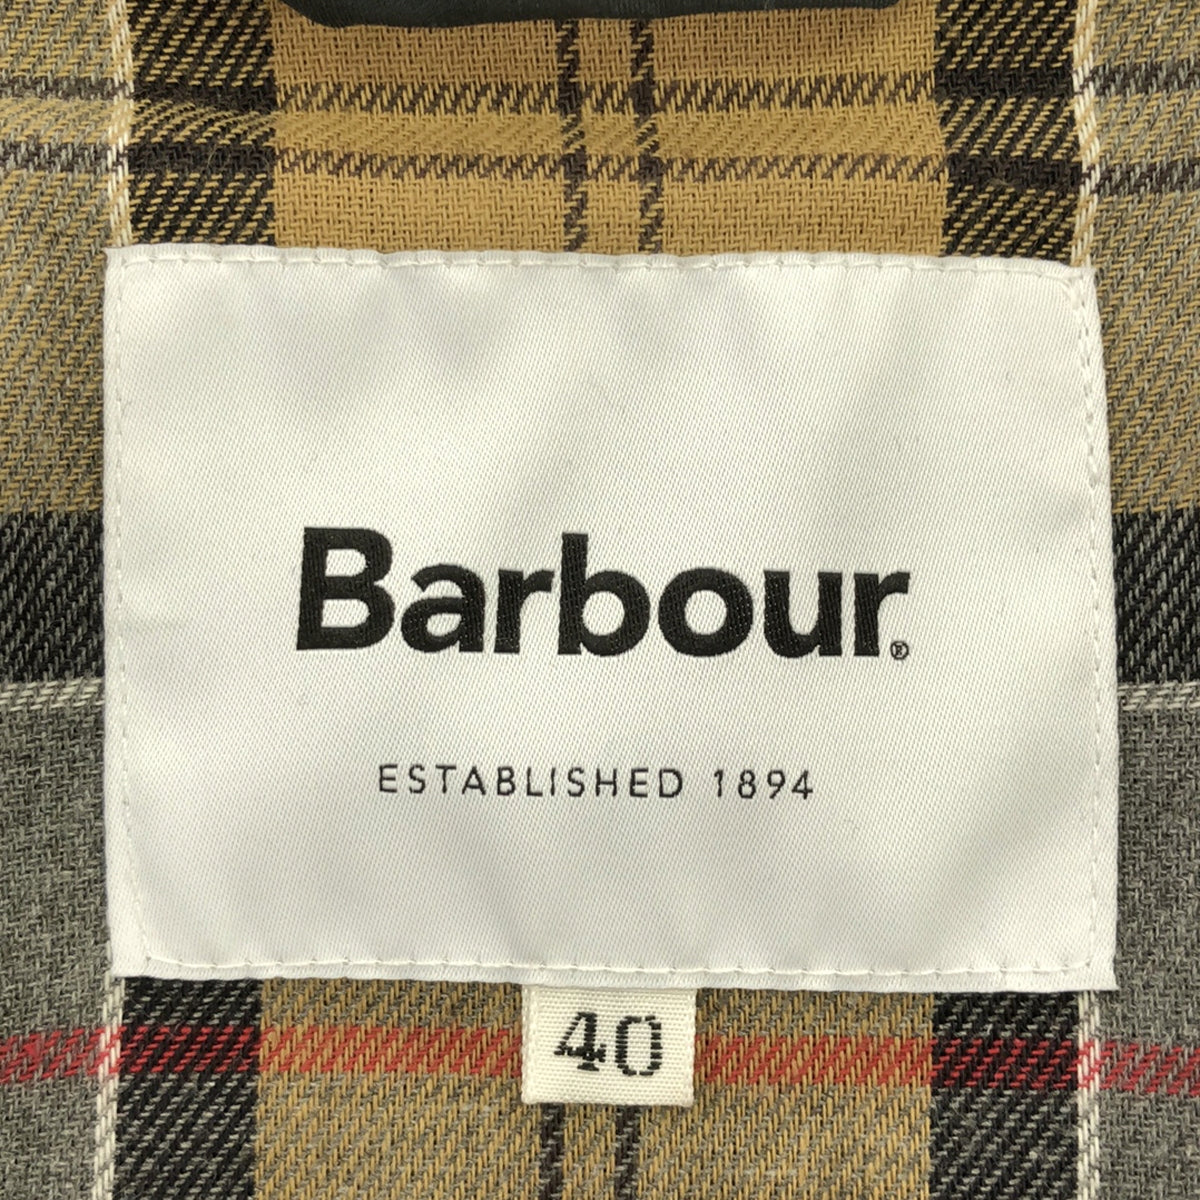 Barbour / バブアー | BEDALE 2レイヤーナイロン ビデイル ジャケット | 40 | グレー系 | メンズ